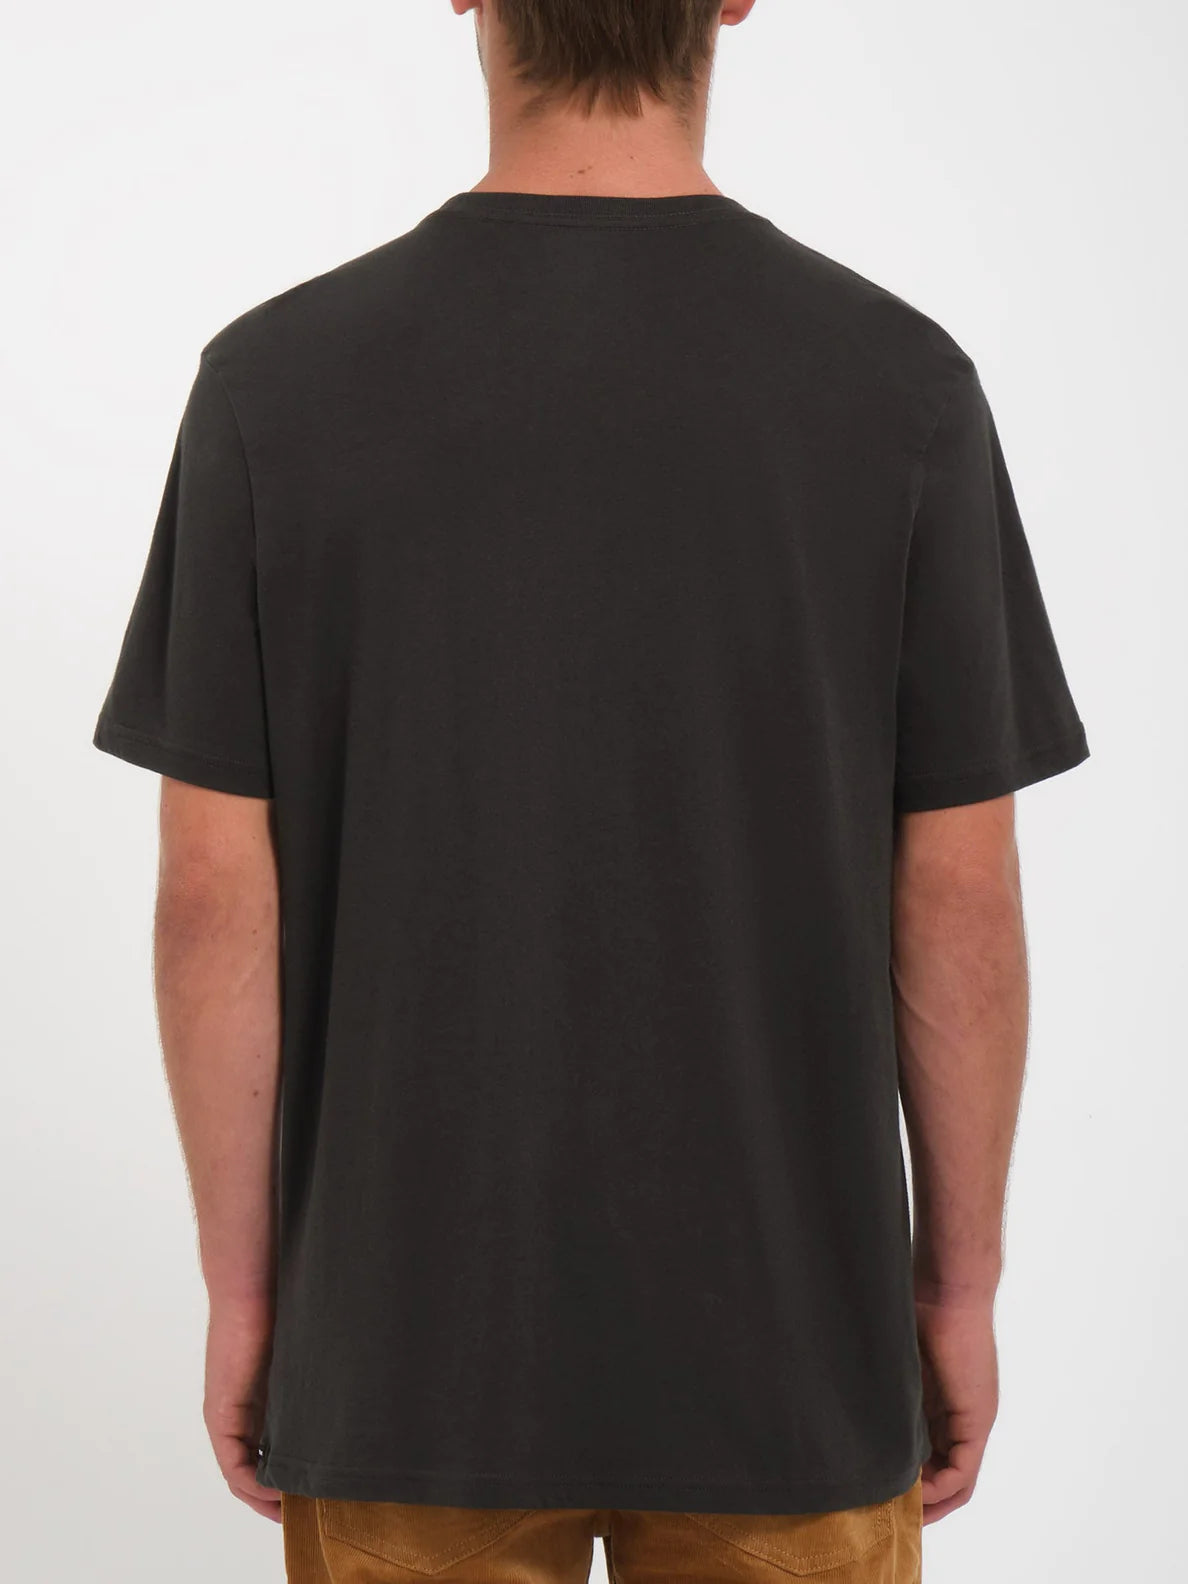 Camiseta Volcom Section Farm To Yarn - Stealth | Camisetas de hombre | Camisetas manga corta de hombre | Volcom Shop | surfdevils.com